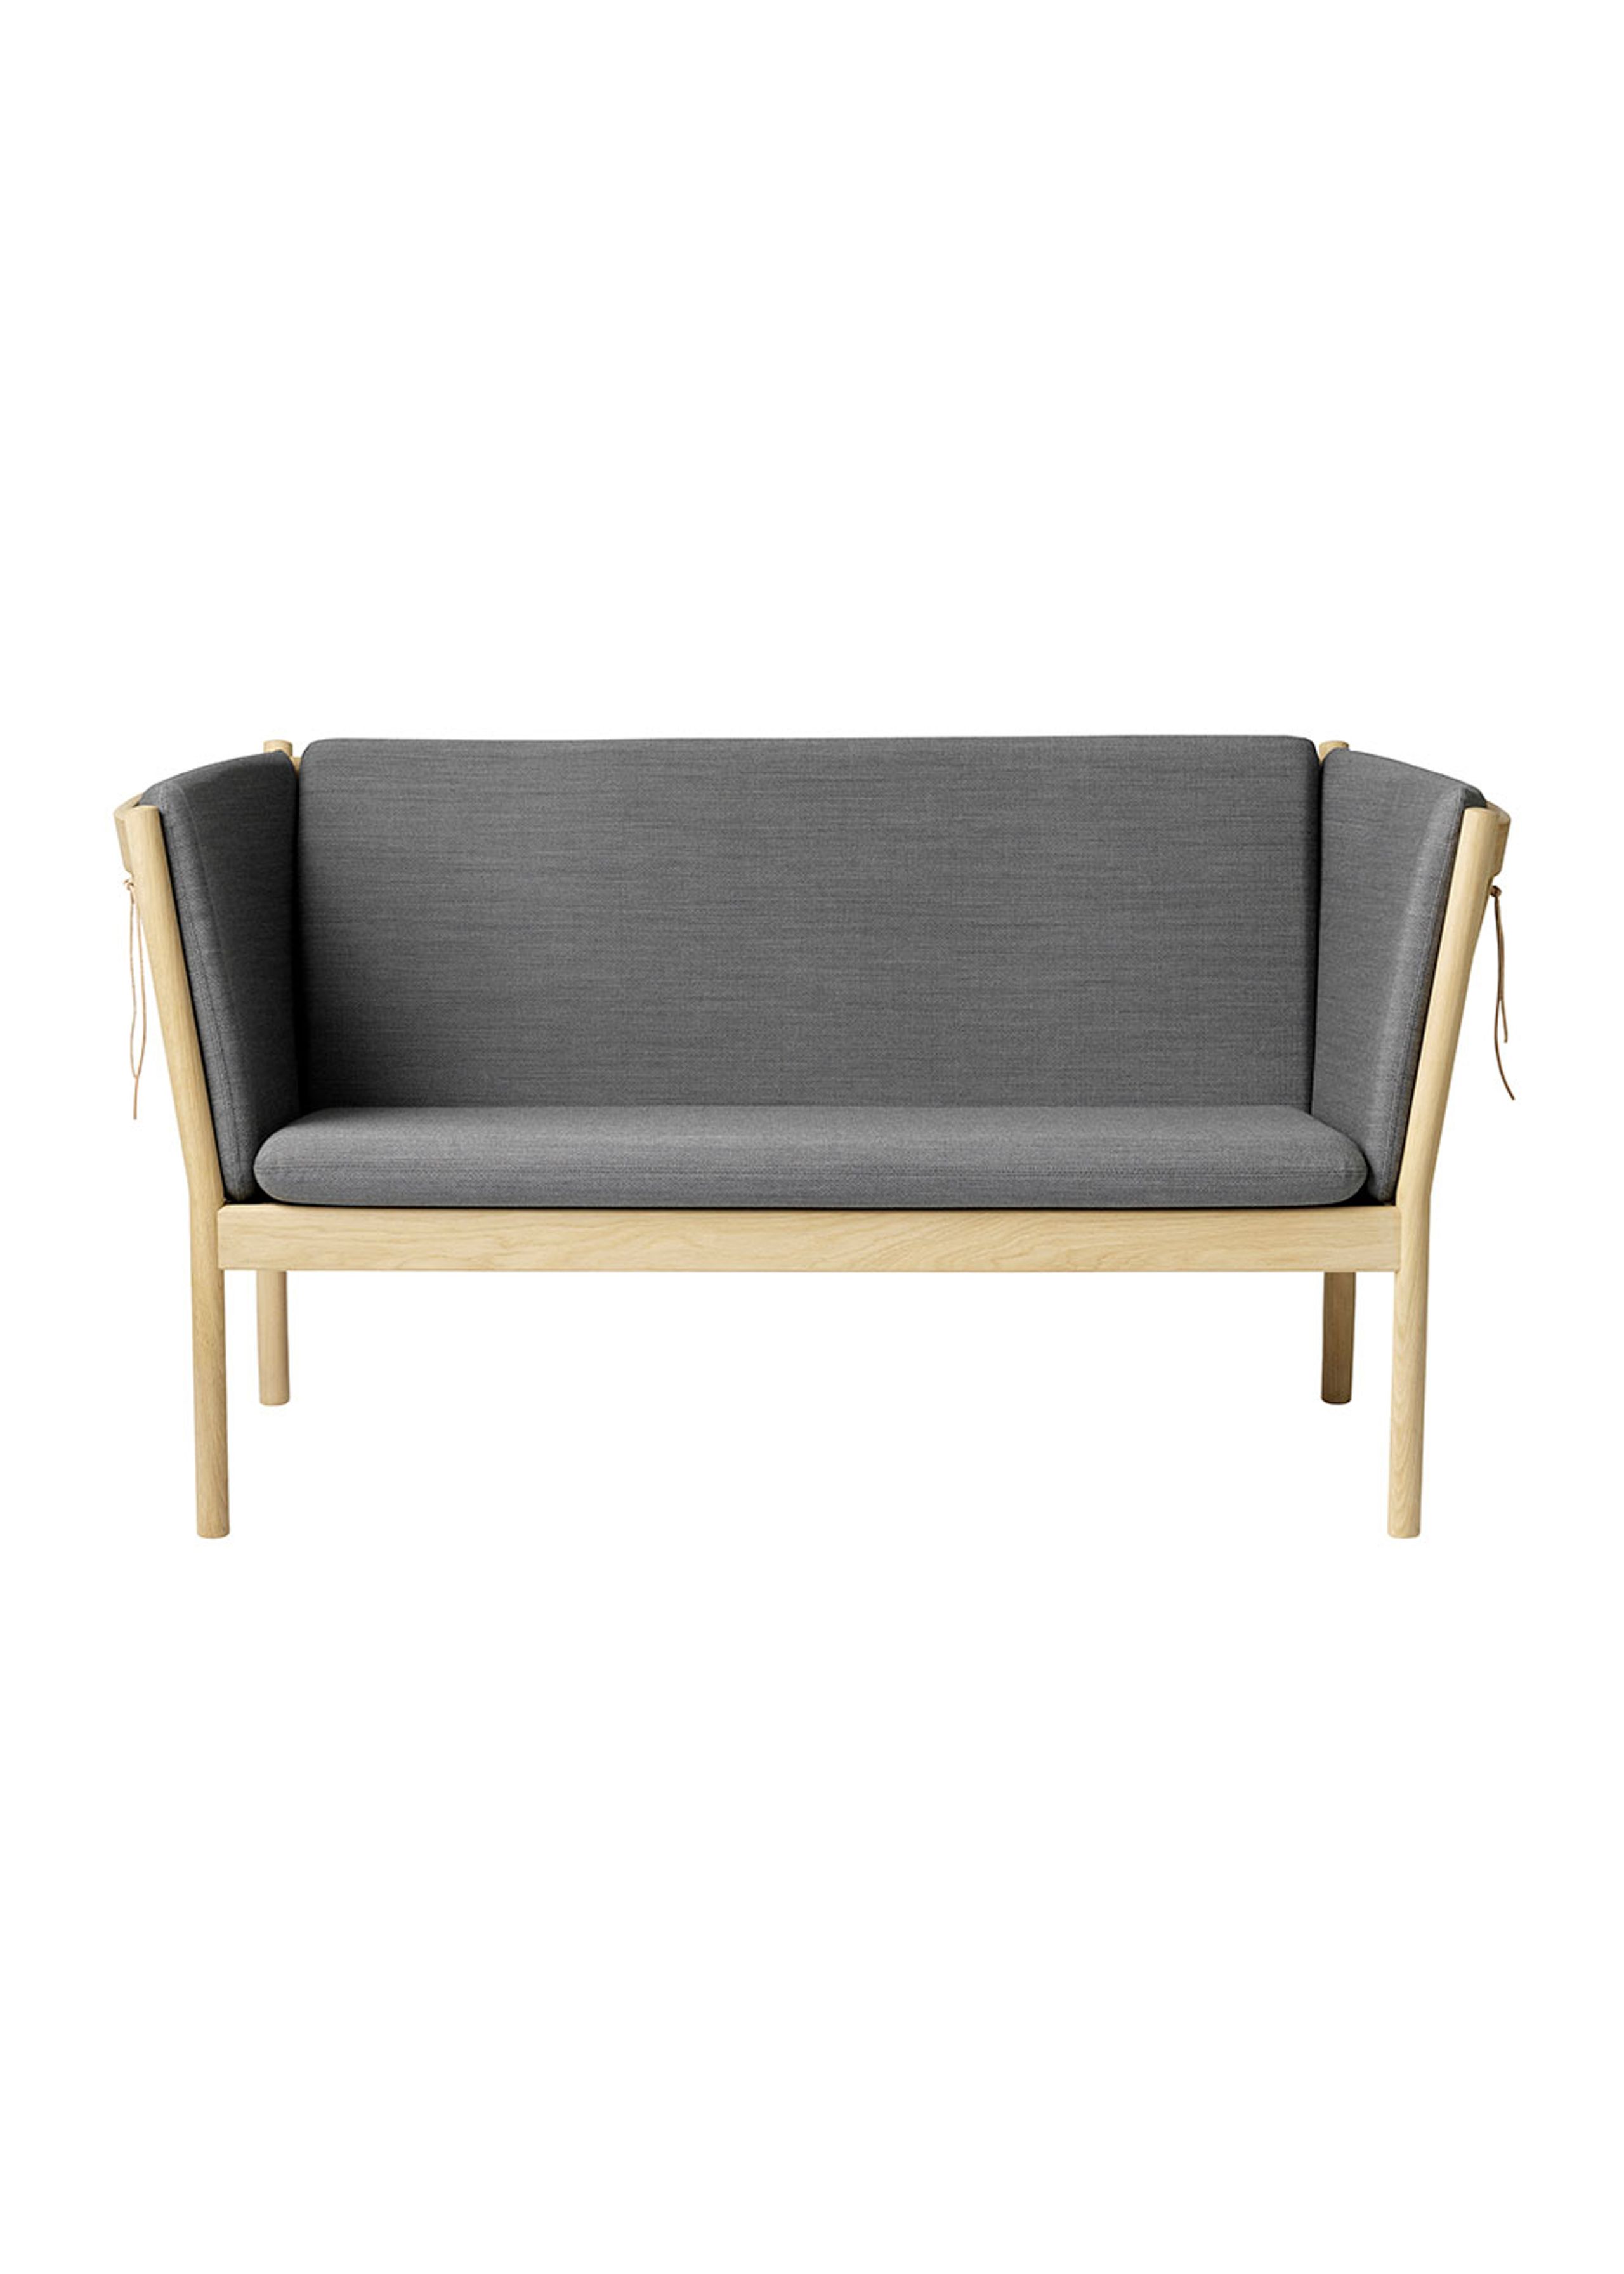 FDB Møbler / Furniture - Sofa - J148 2 pers by Erik Ole Jørgensen - Eg, Natur, Lakeret / Uld, Antracitgrå